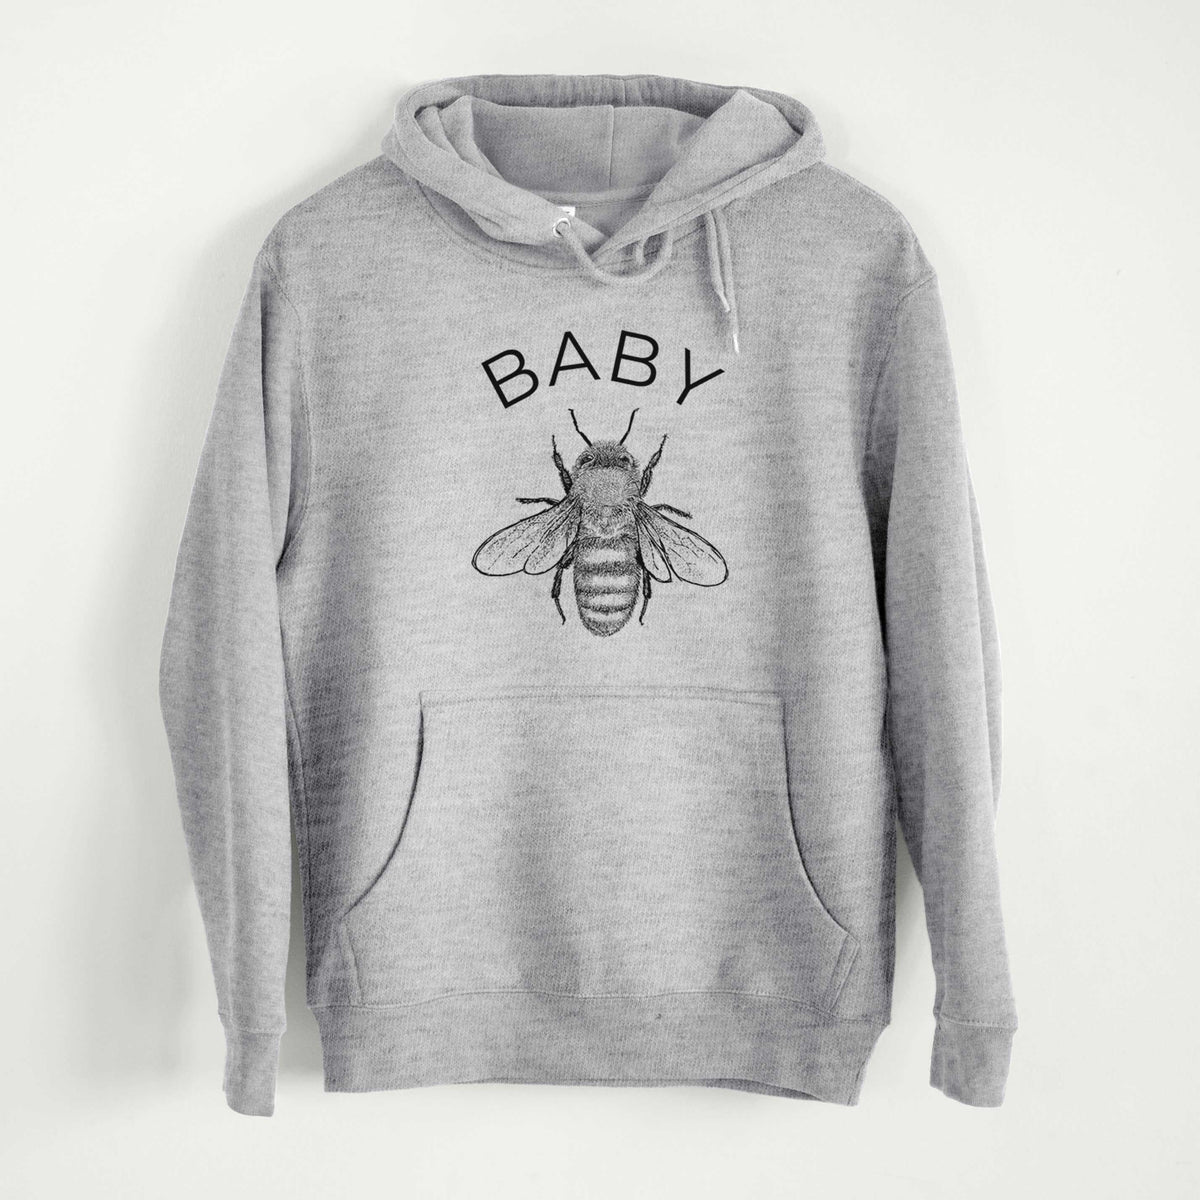 Baby Bee  - Mid-Weight Unisex Premium Blend Hoodie